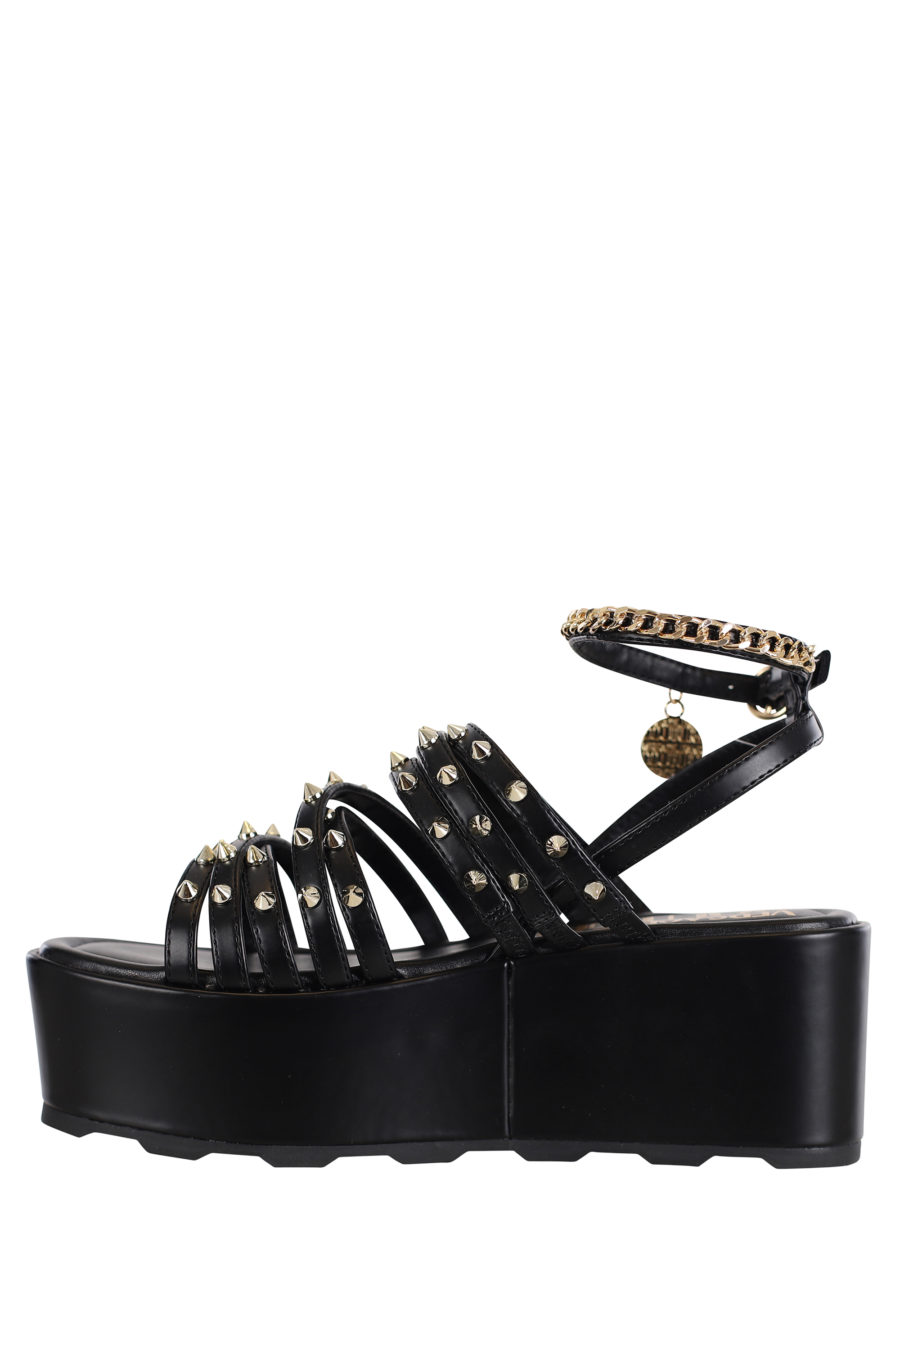 Sandalias negras con plataforma y detalles dorados - IMG 0187